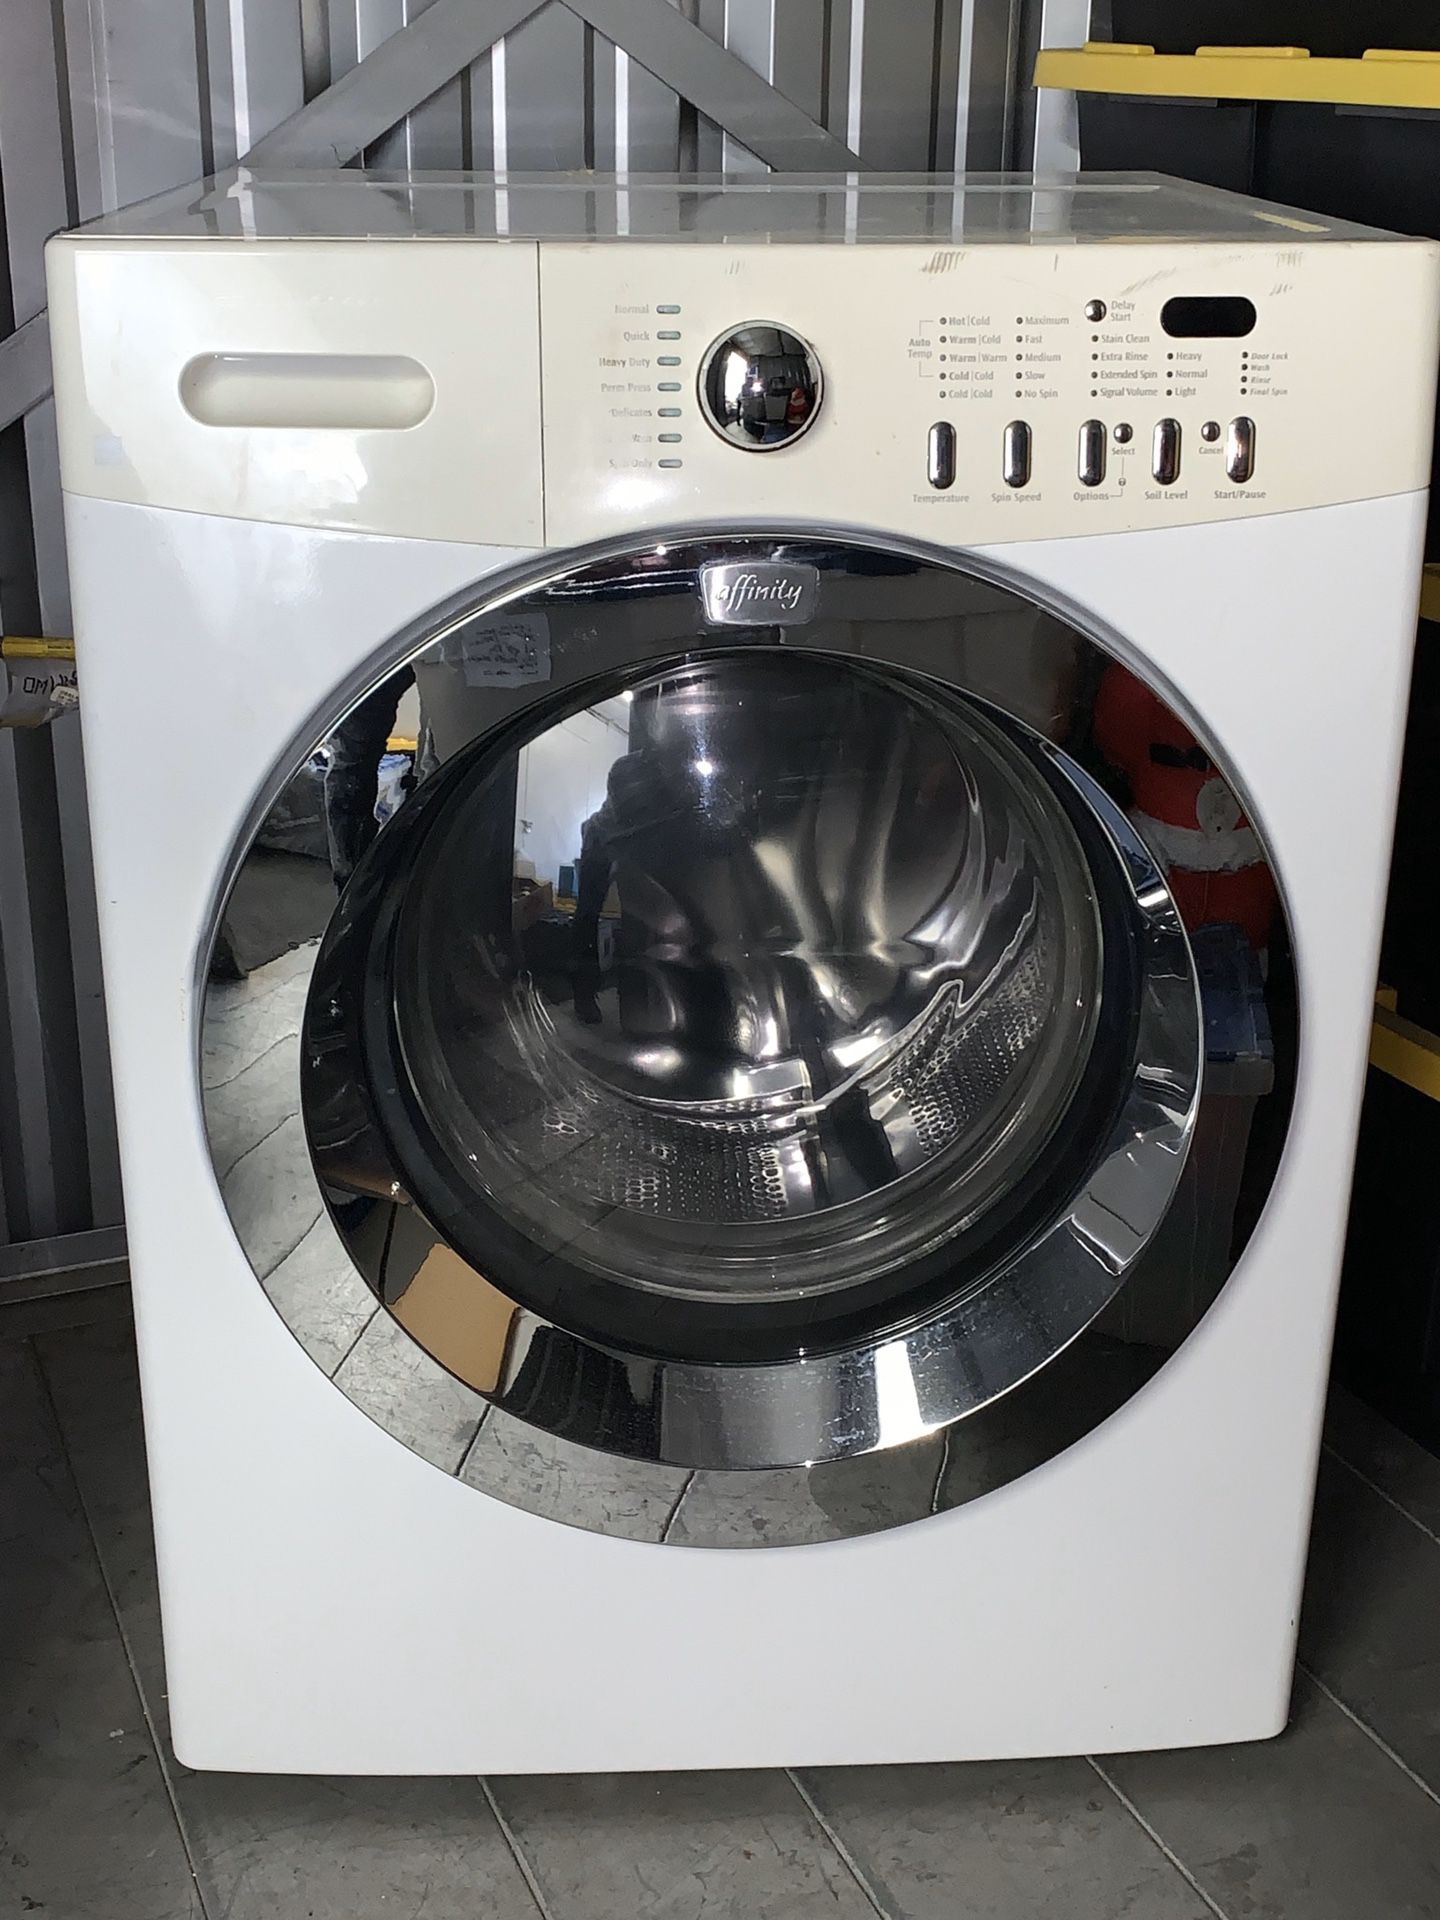 Appliance washing machine